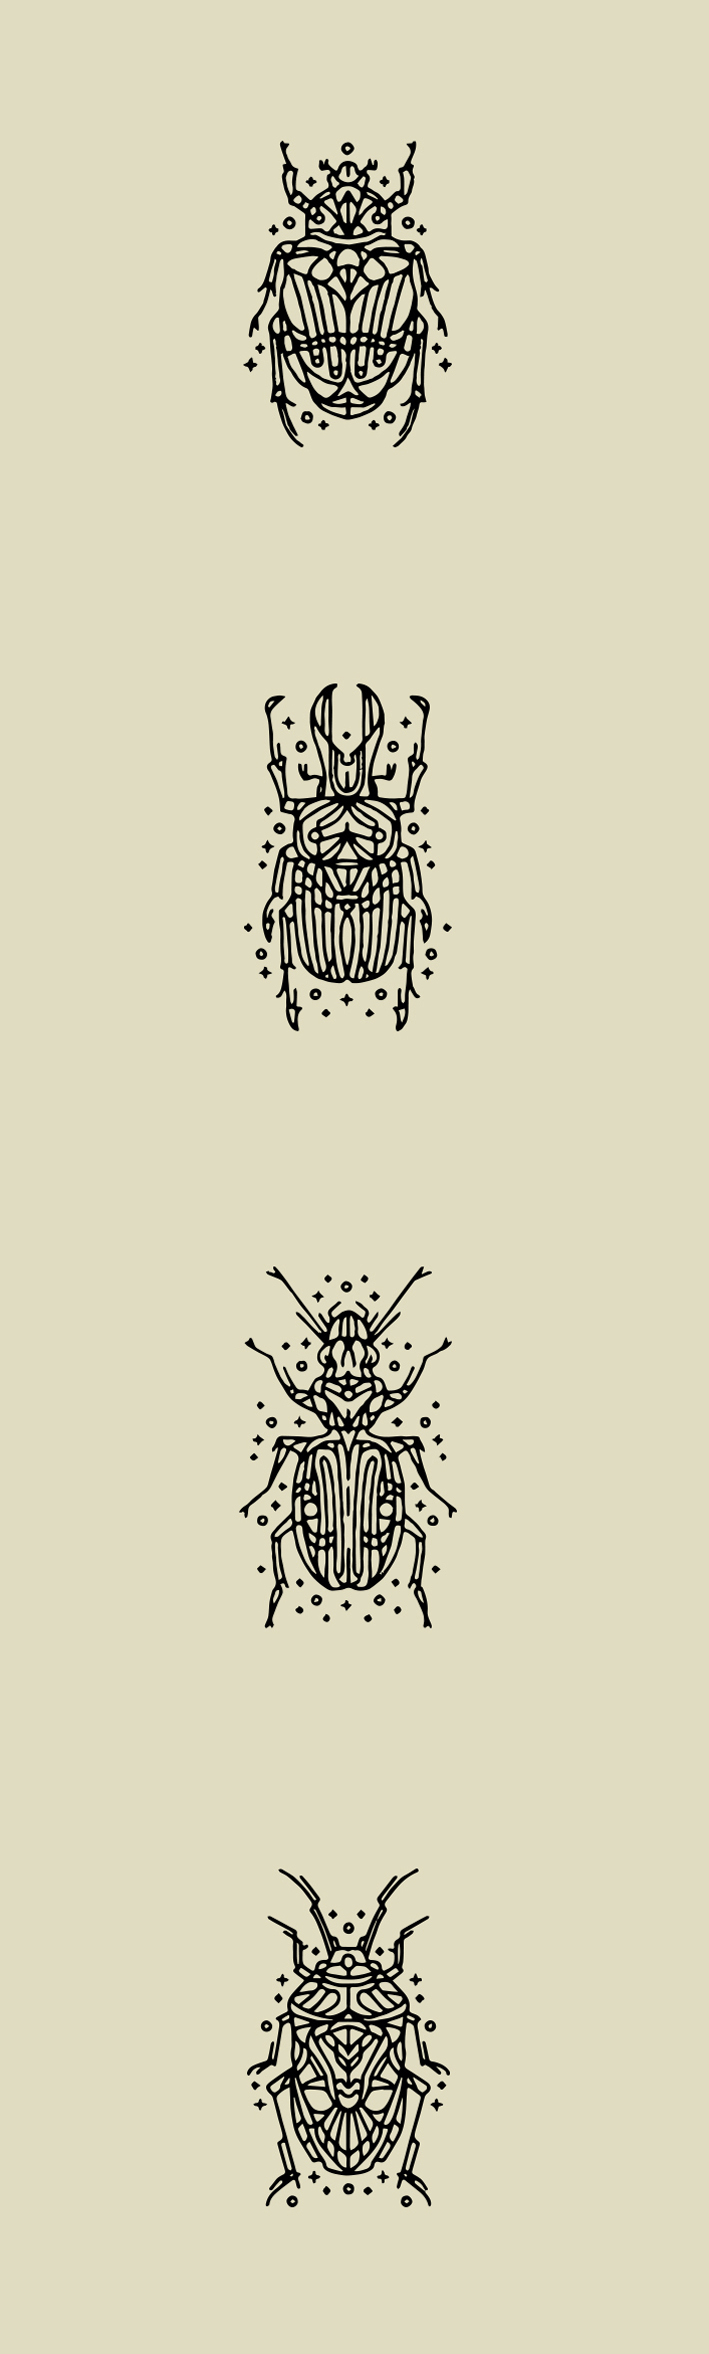 Premium Vector | Insect tribal tattoo design element